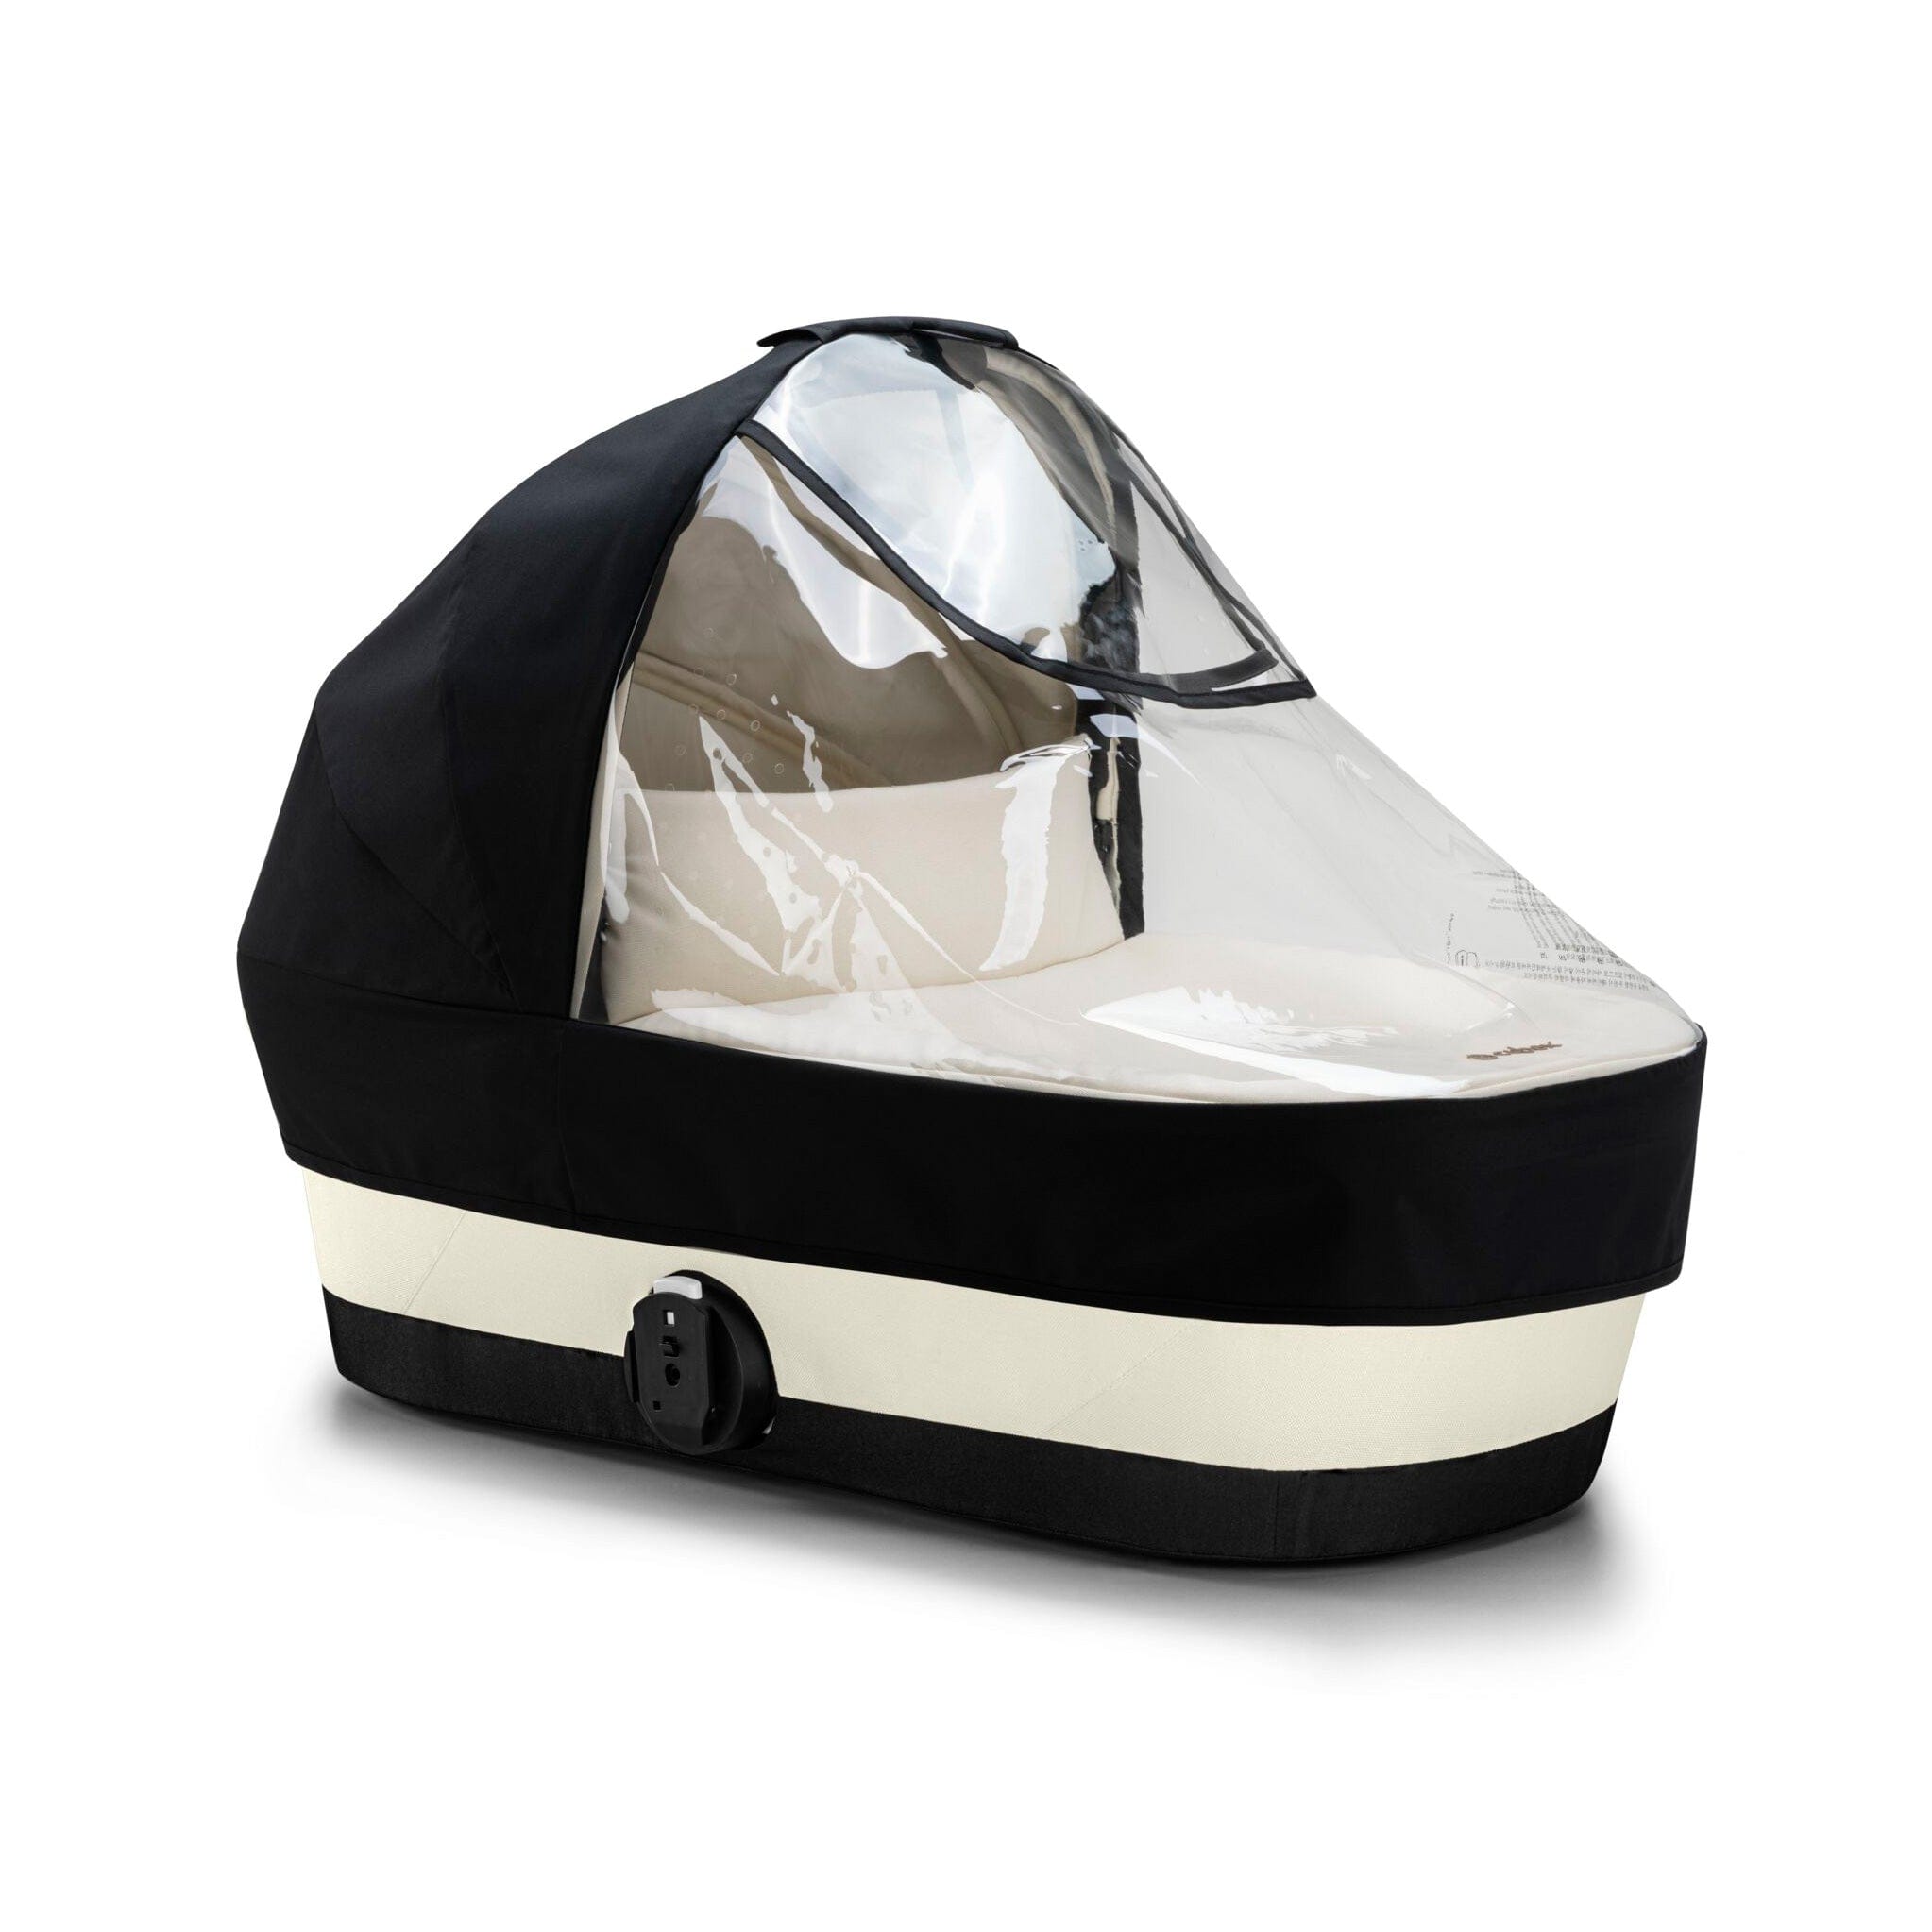 Cybex baby prams Cybex Gazelle S Comfort Bundle - Taupe/Seashell Beige 12771-TPE-SEA-BEI